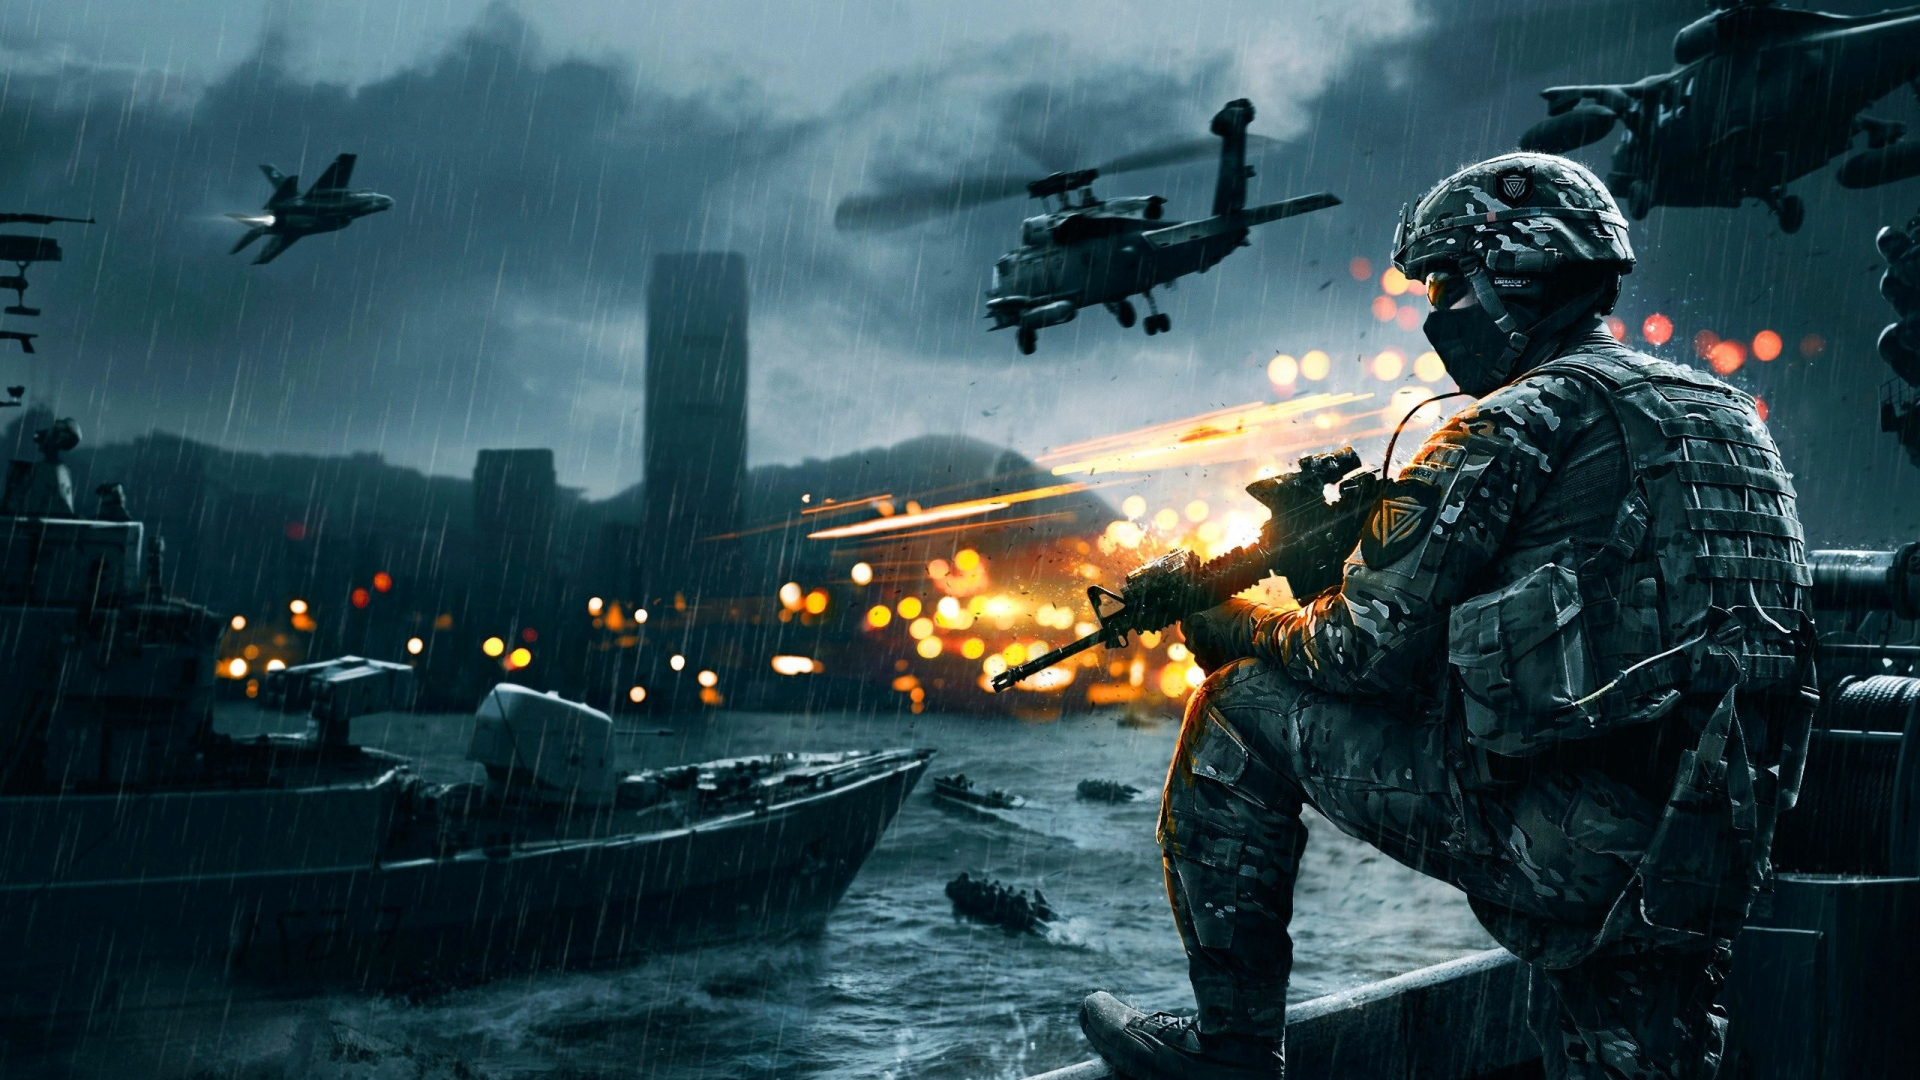 Download 1920x1080 Battlefield 4 Game Ea digital illusions ce Wallpaper Background Full HD 1080p